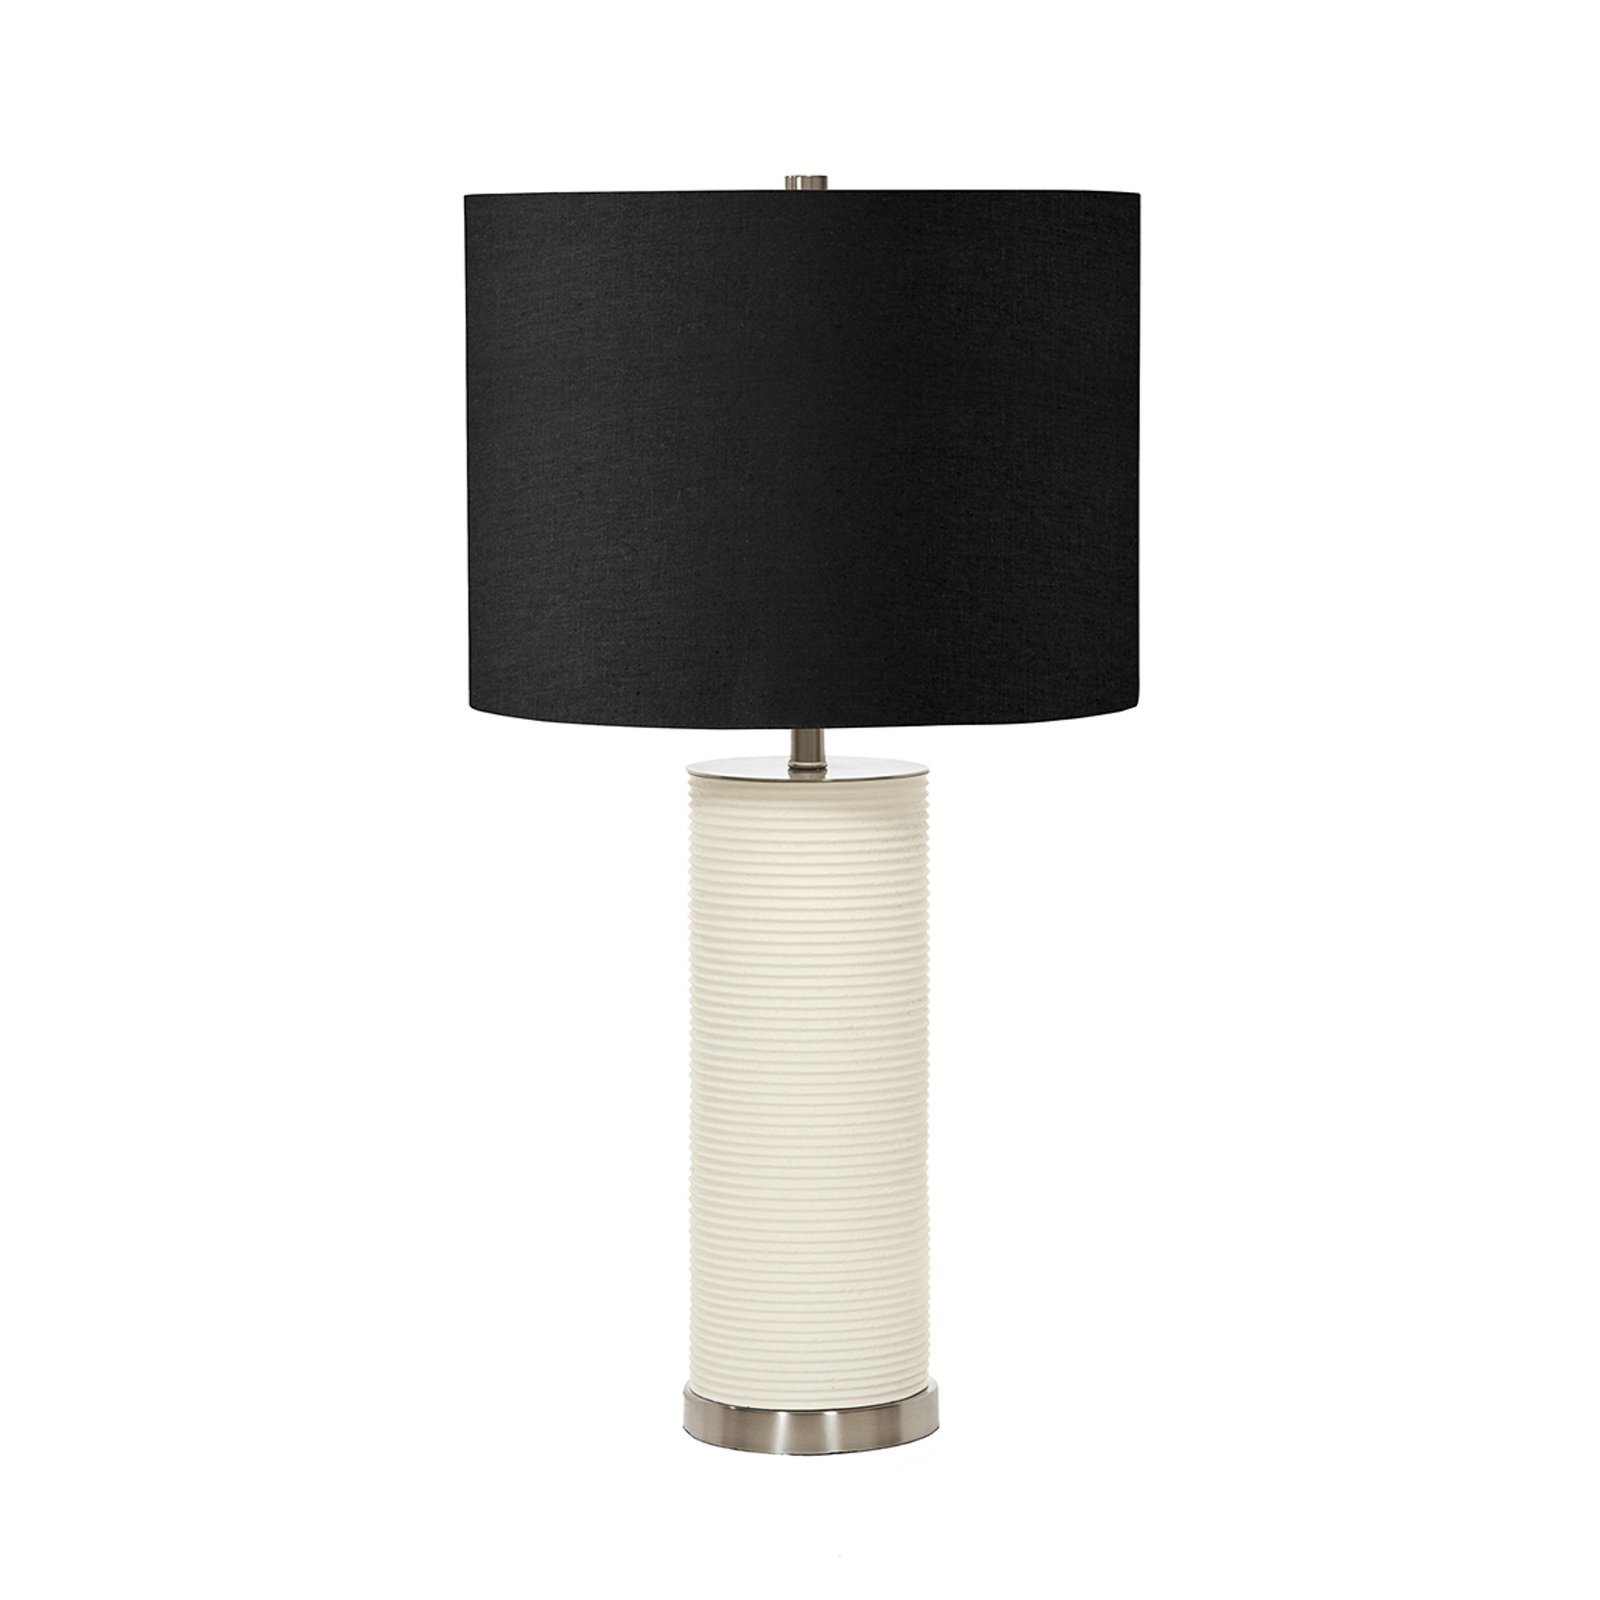 Textilbordslampa Ripple fot vit/skärm svart